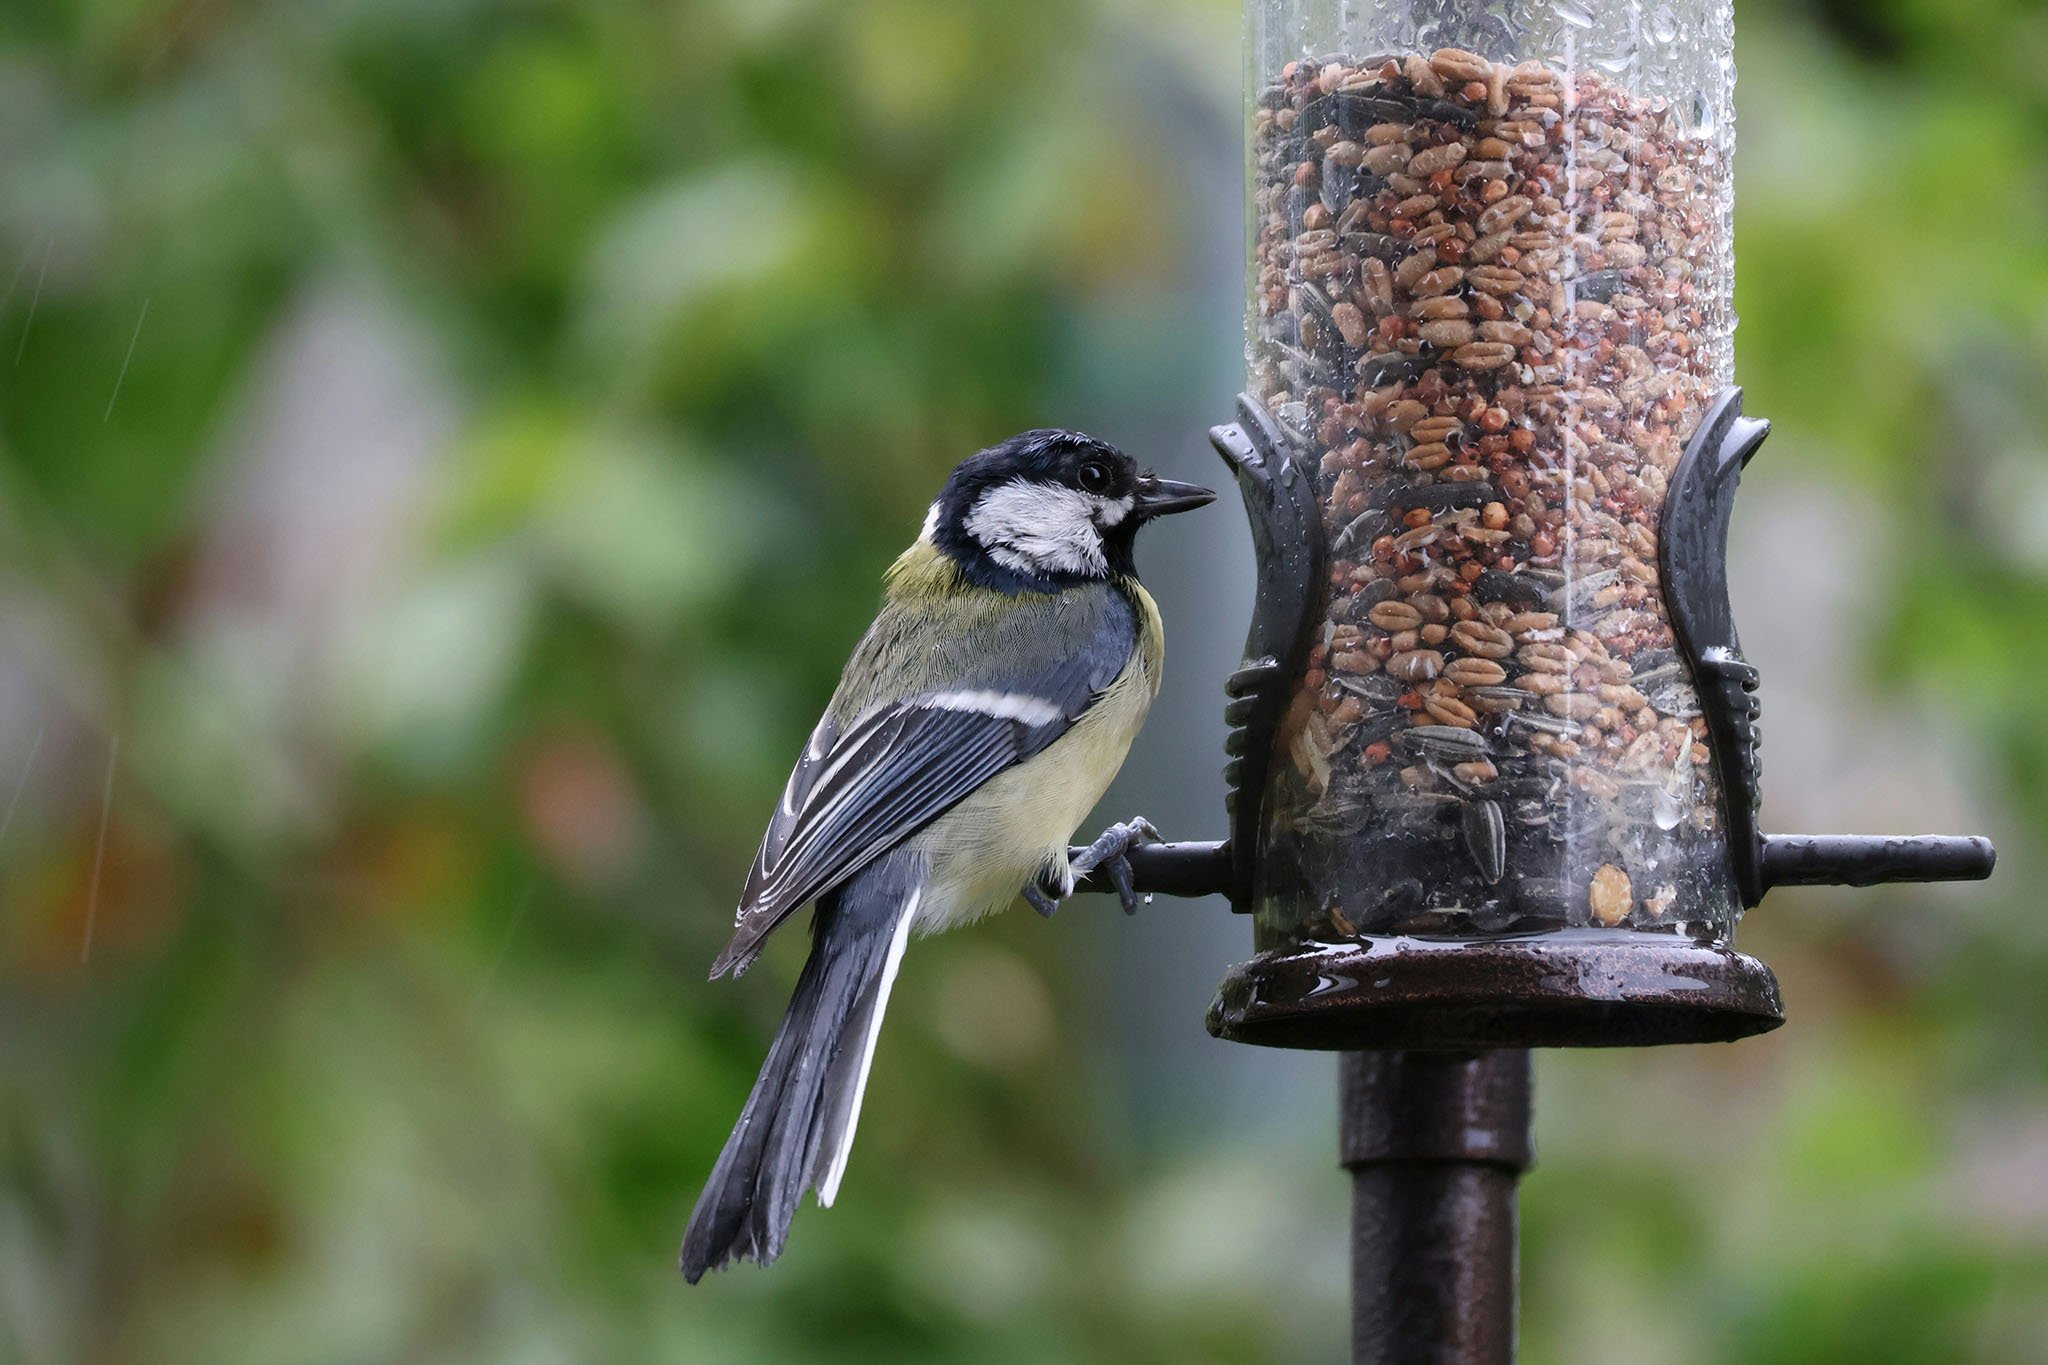 Bird perched on a bird feeder.